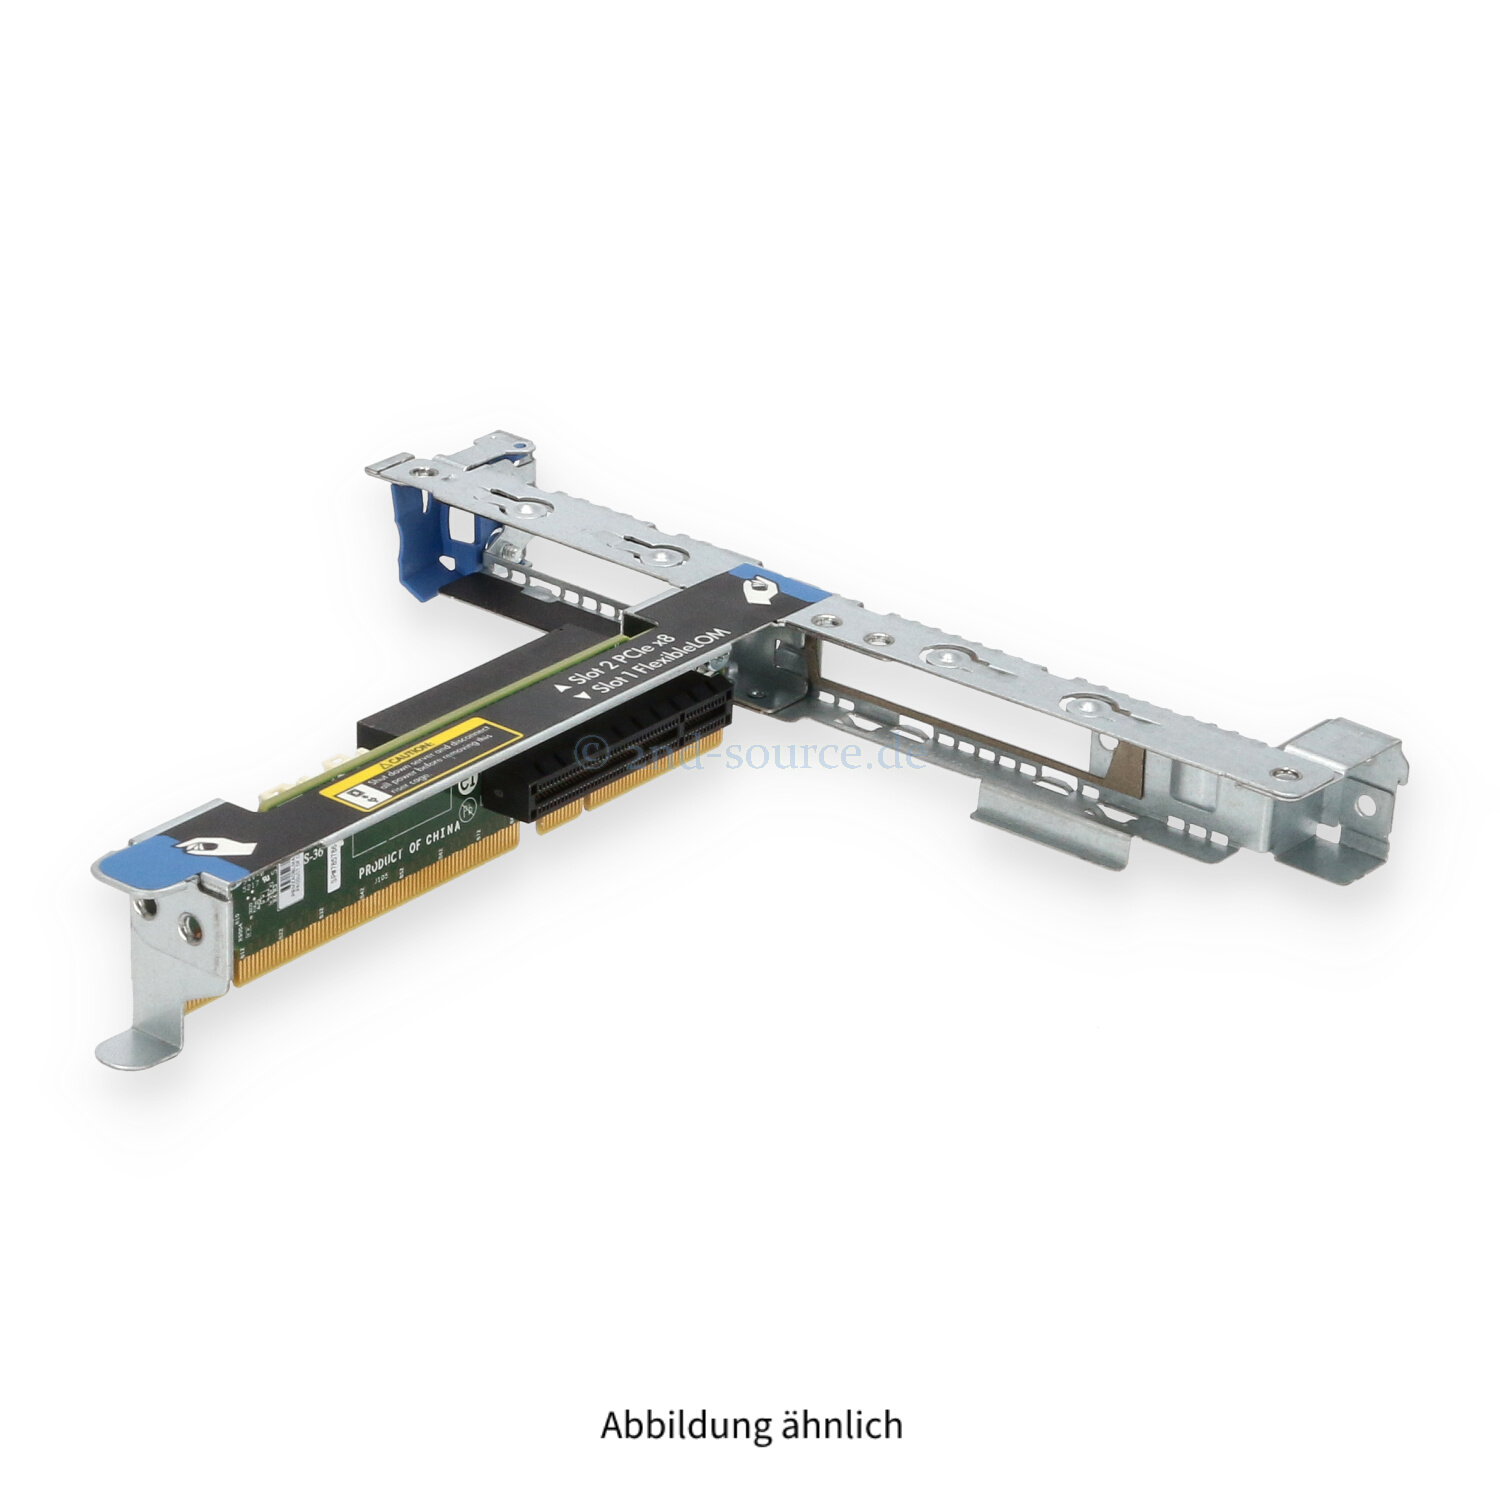 HPE FlexibleLOM Riser Card PCIe 3.0 x8 x16 DL160 G9 785786-001 779924-001